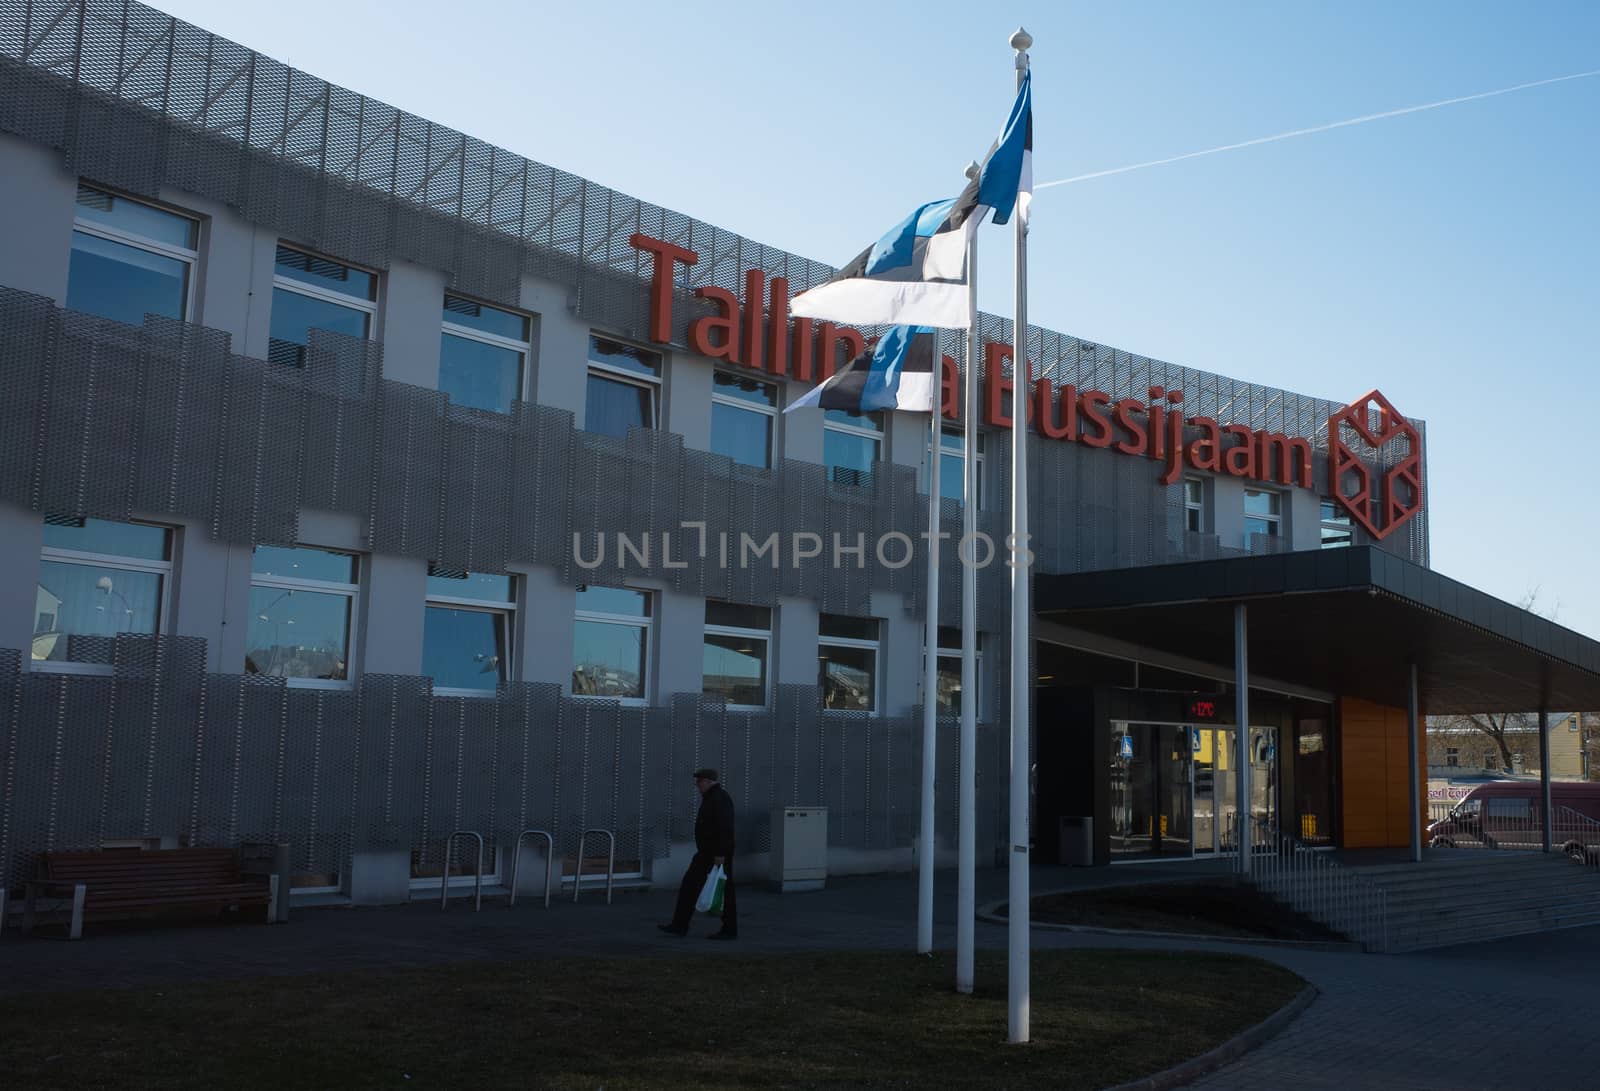 19 April 2018, Tallinn, Estonia. Tallinn bus station building